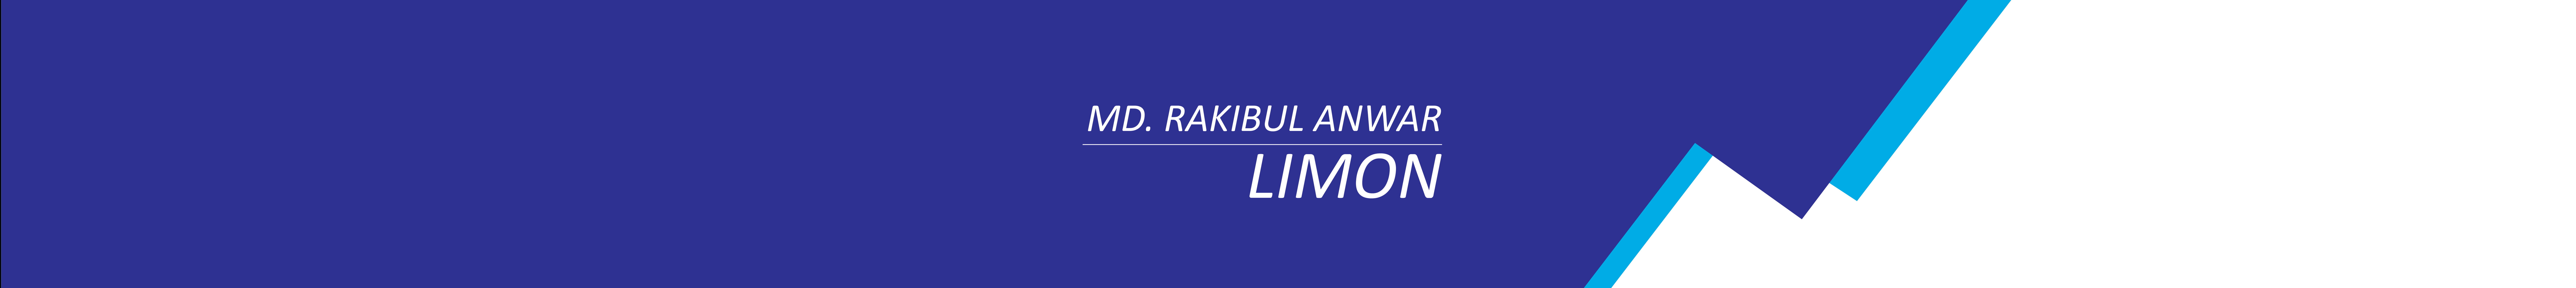 Profielbanner van Md Rakibul Anwar (Limon)